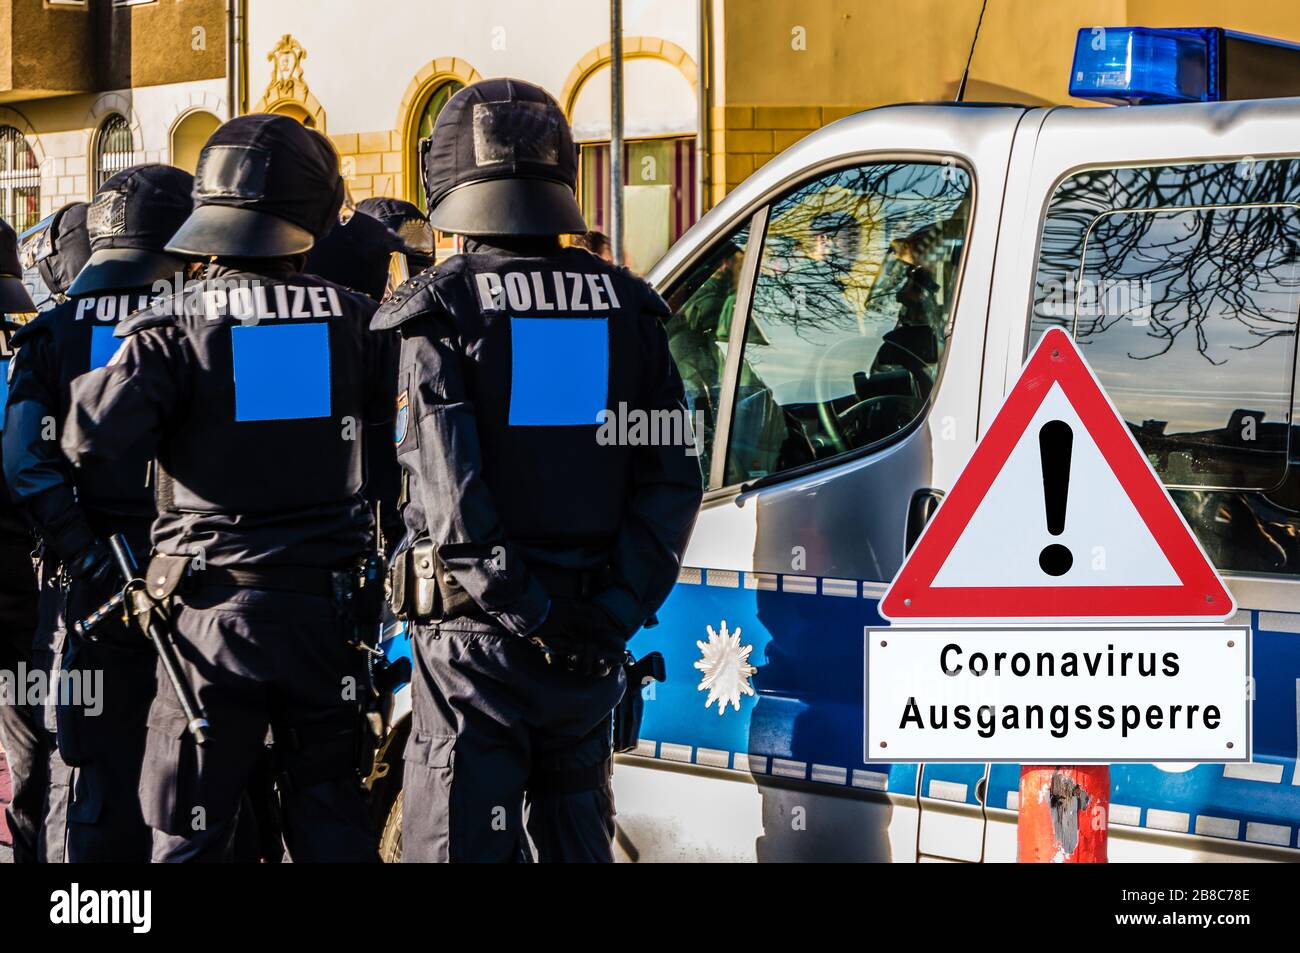 Corona virus curfew warning sign police control in german Stock Photo